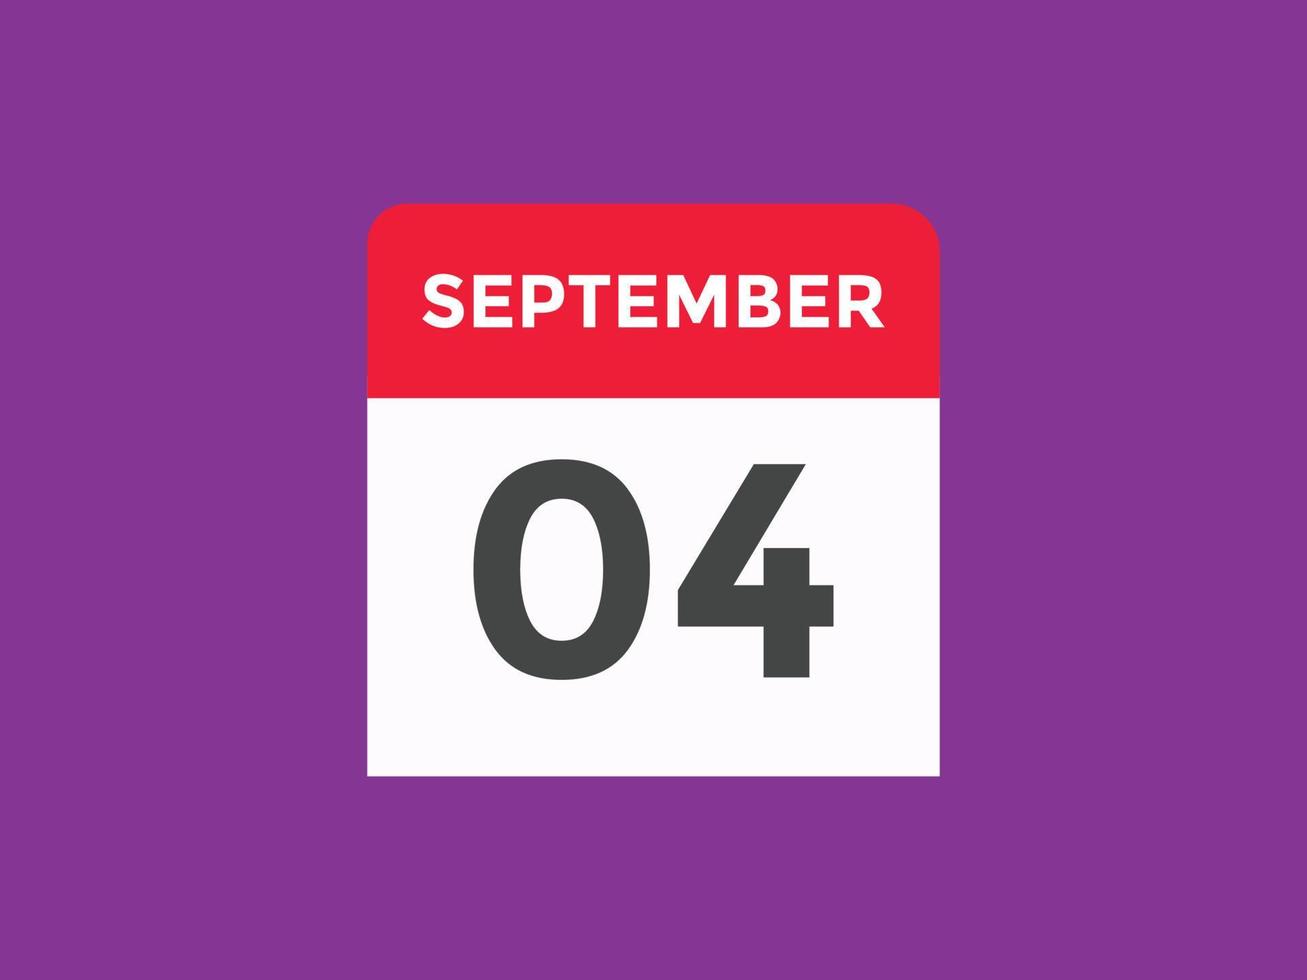 september 4 calendar reminder. 4th september daily calendar icon template. Calendar 4th september icon Design template. Vector illustration